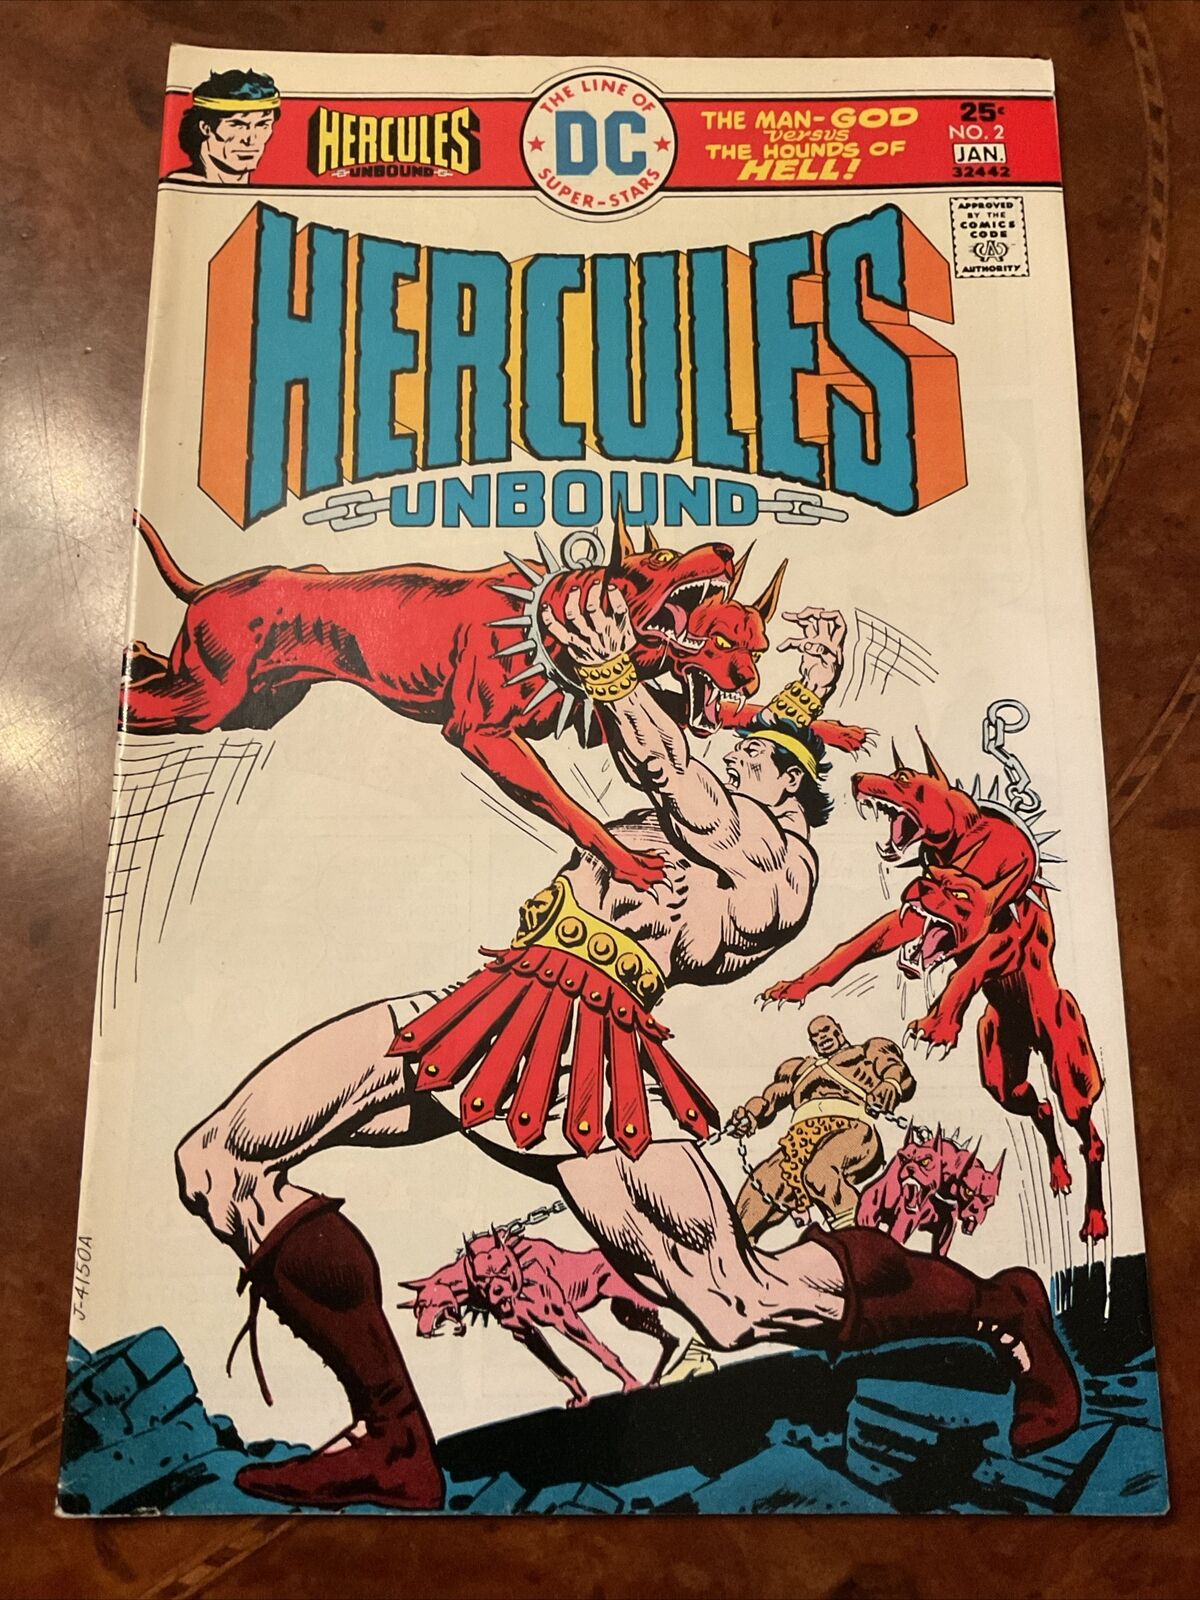 DC Hercules Unbound #2 bronze age comic book 1976 Garcia-Lopez pencils Wood inks